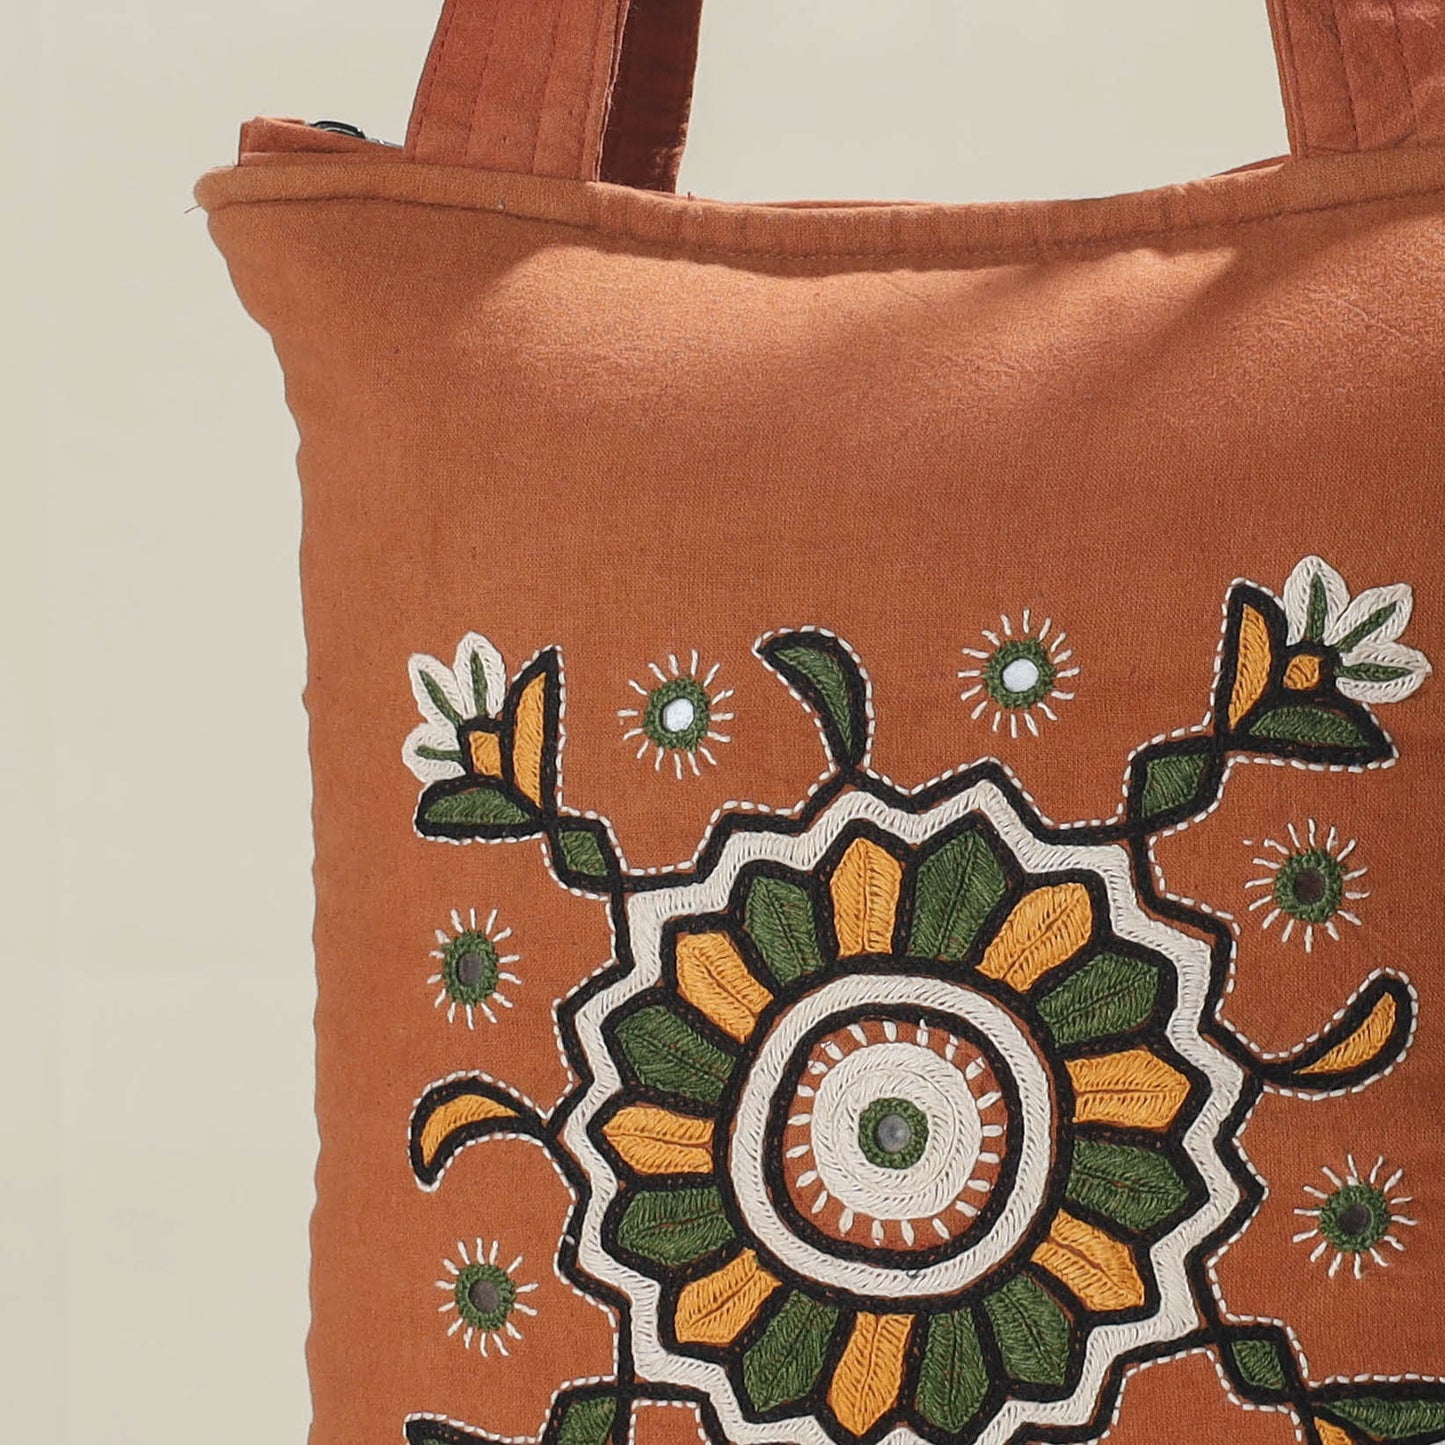 Kala Raksha Pakko Hand Embroidered Cotton Shoulder Bag